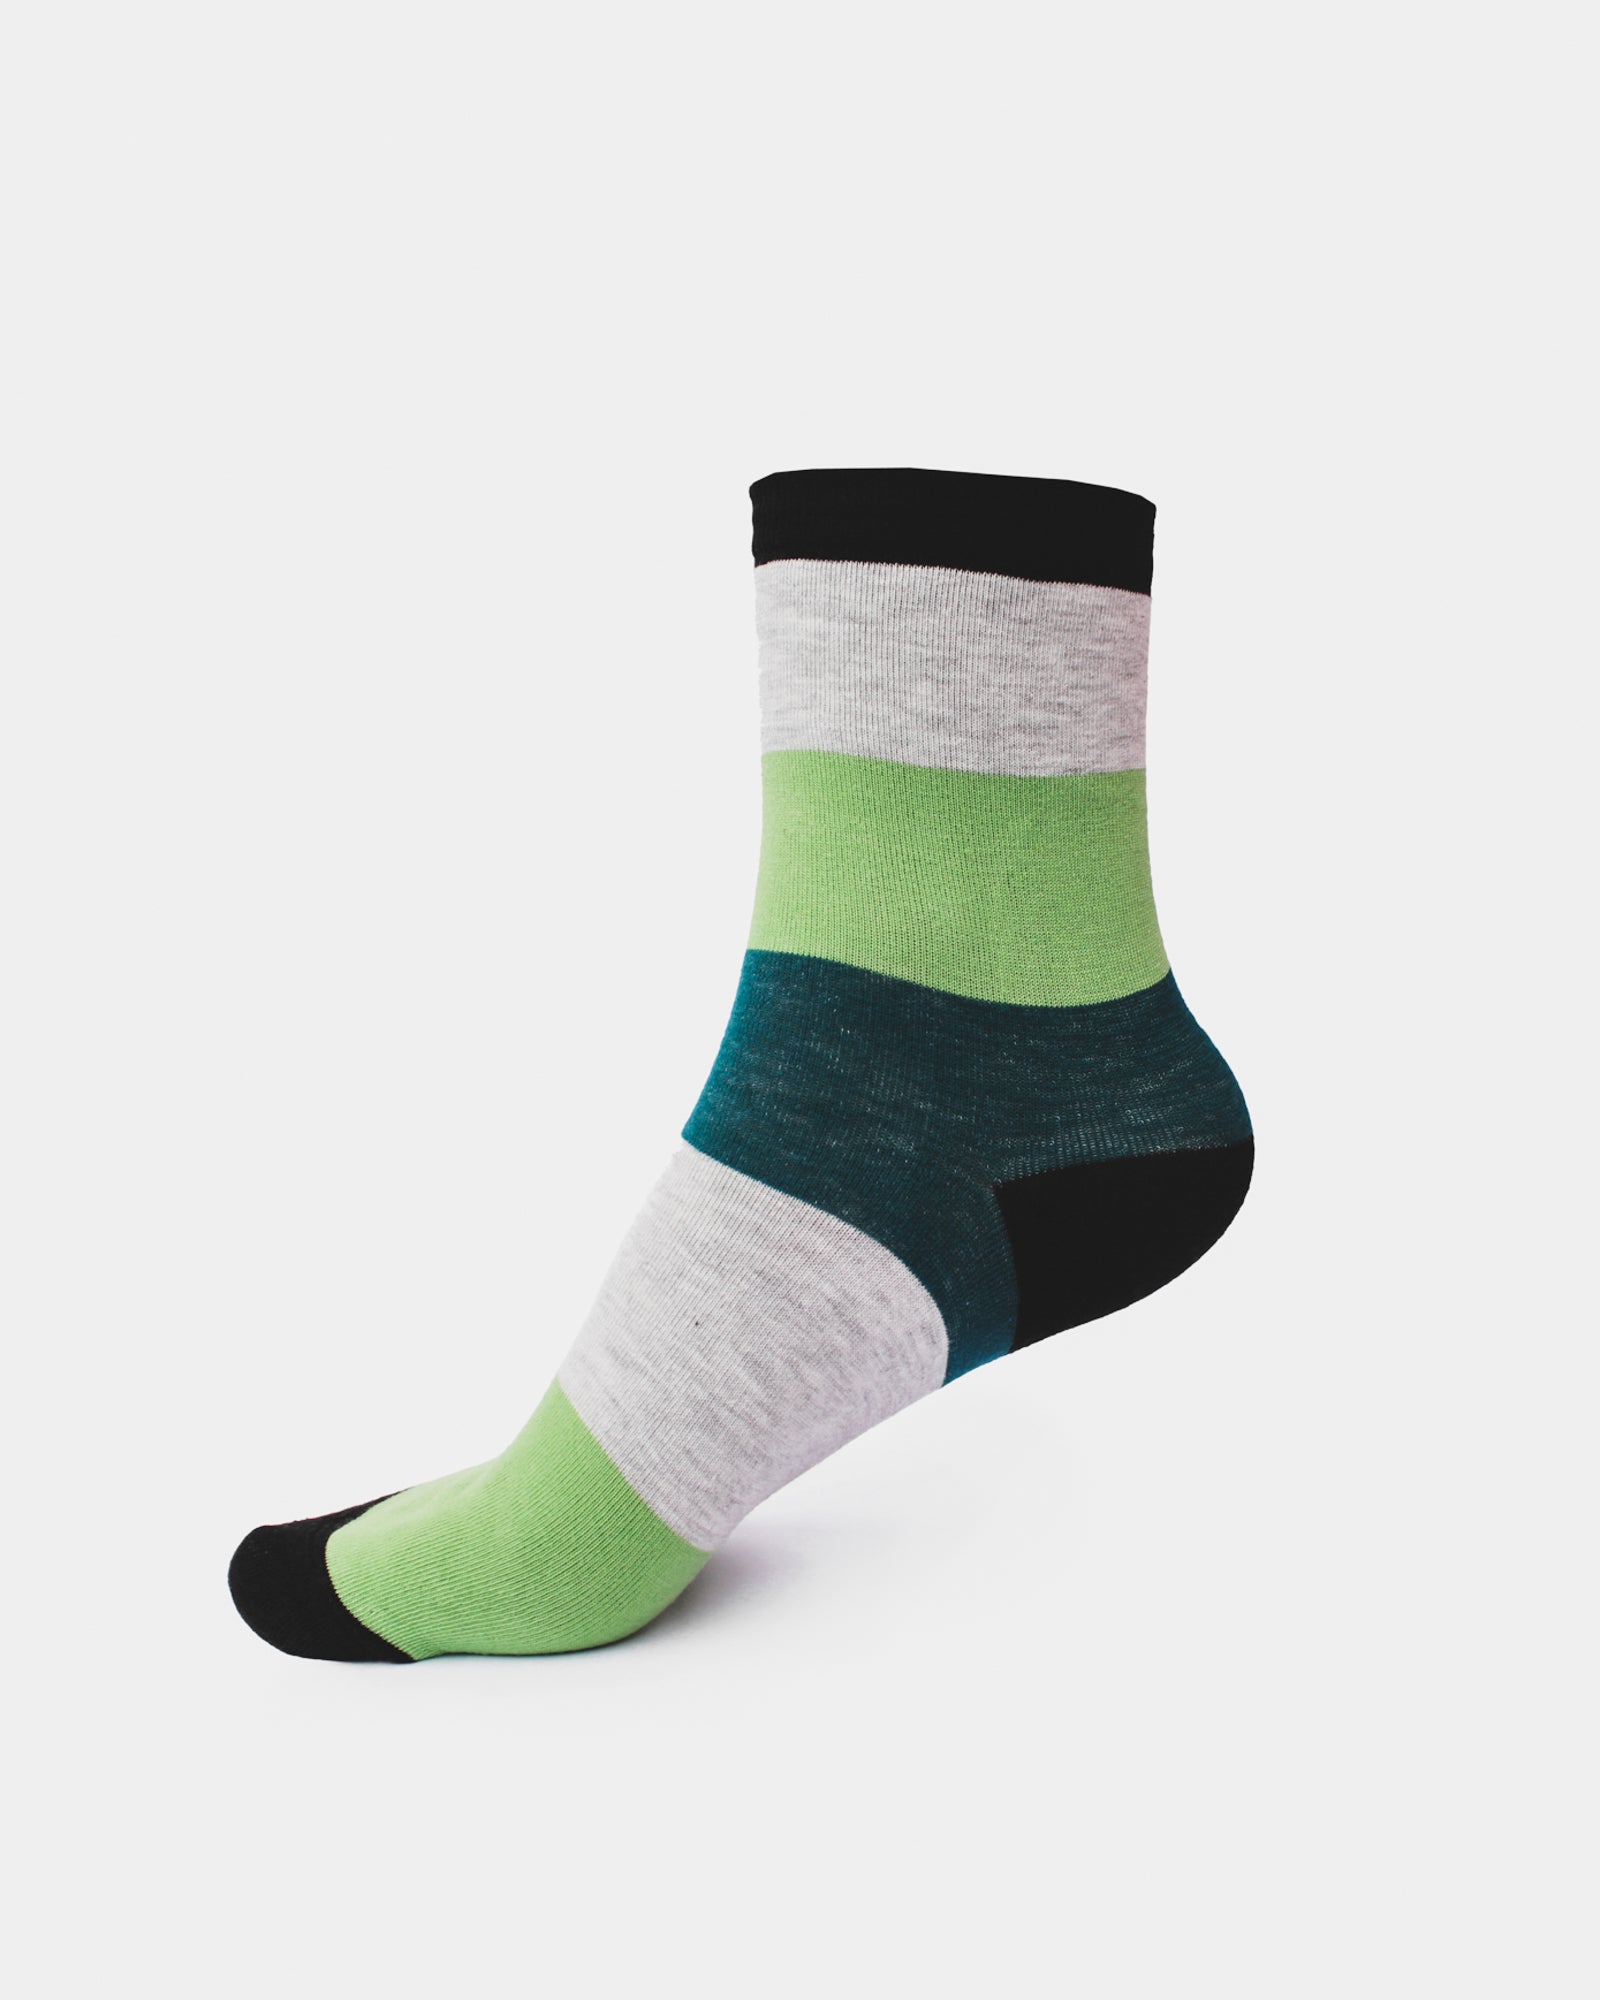 Men's Lime-Guac Breathable Cotton Socks